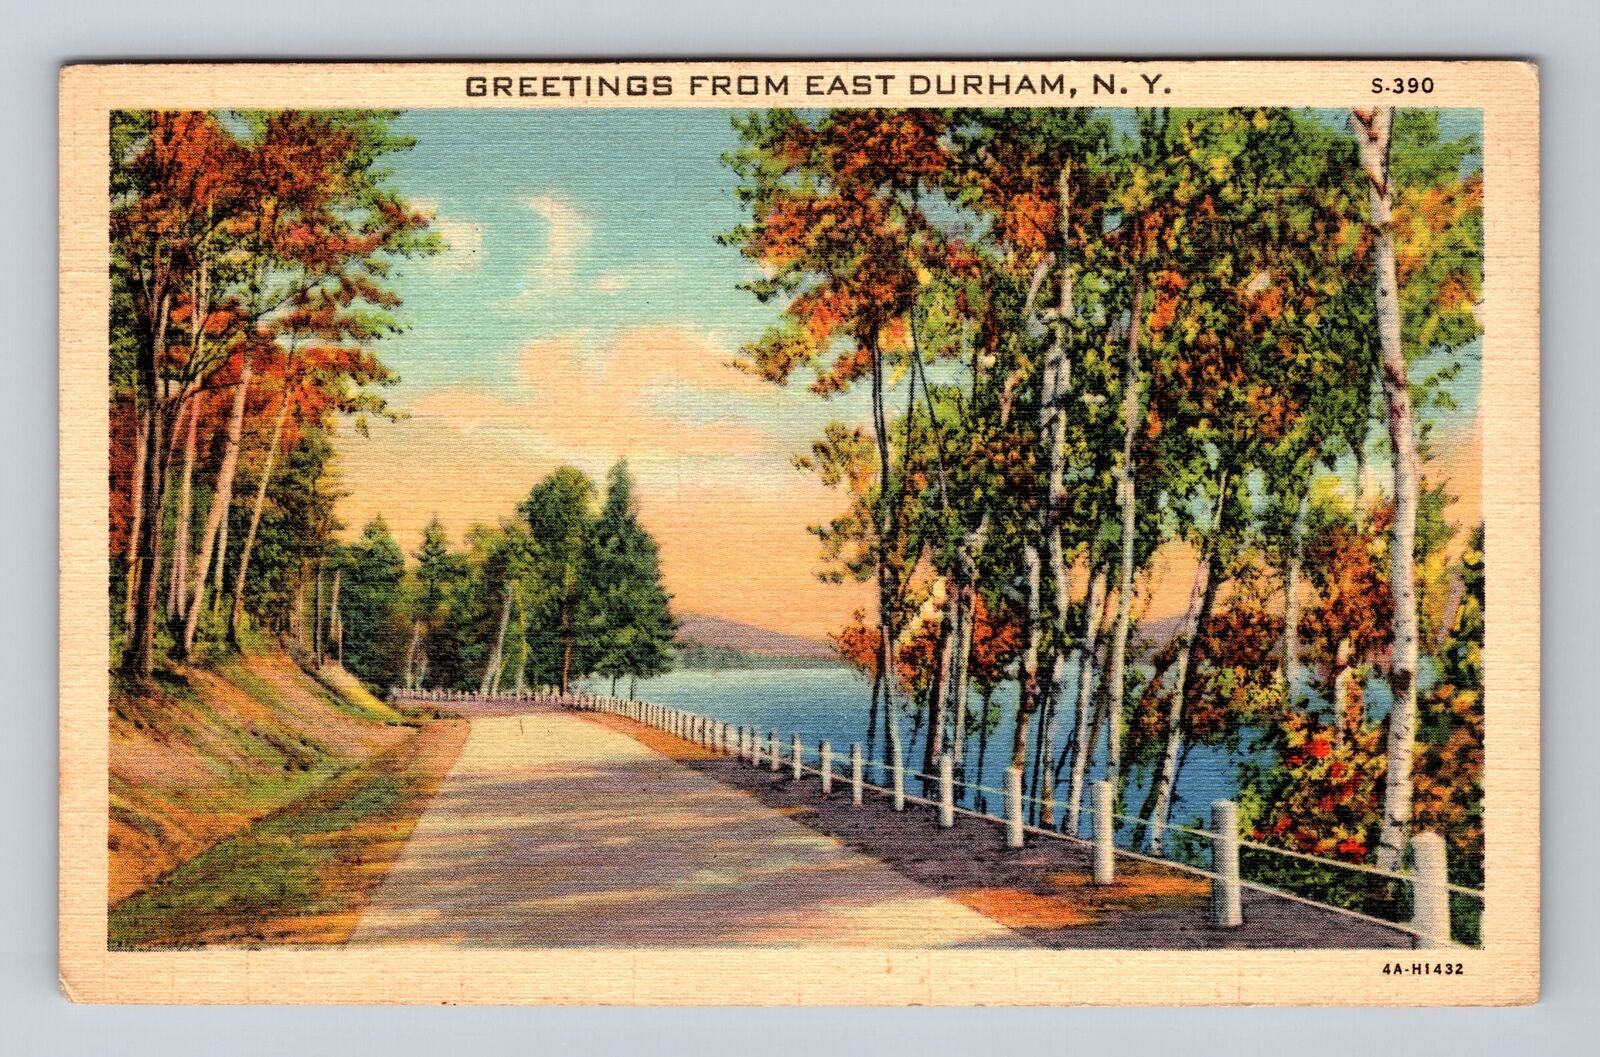 East Durham NY- New York, Scenic Greetings, Antique, Vintage c1940 Postcard